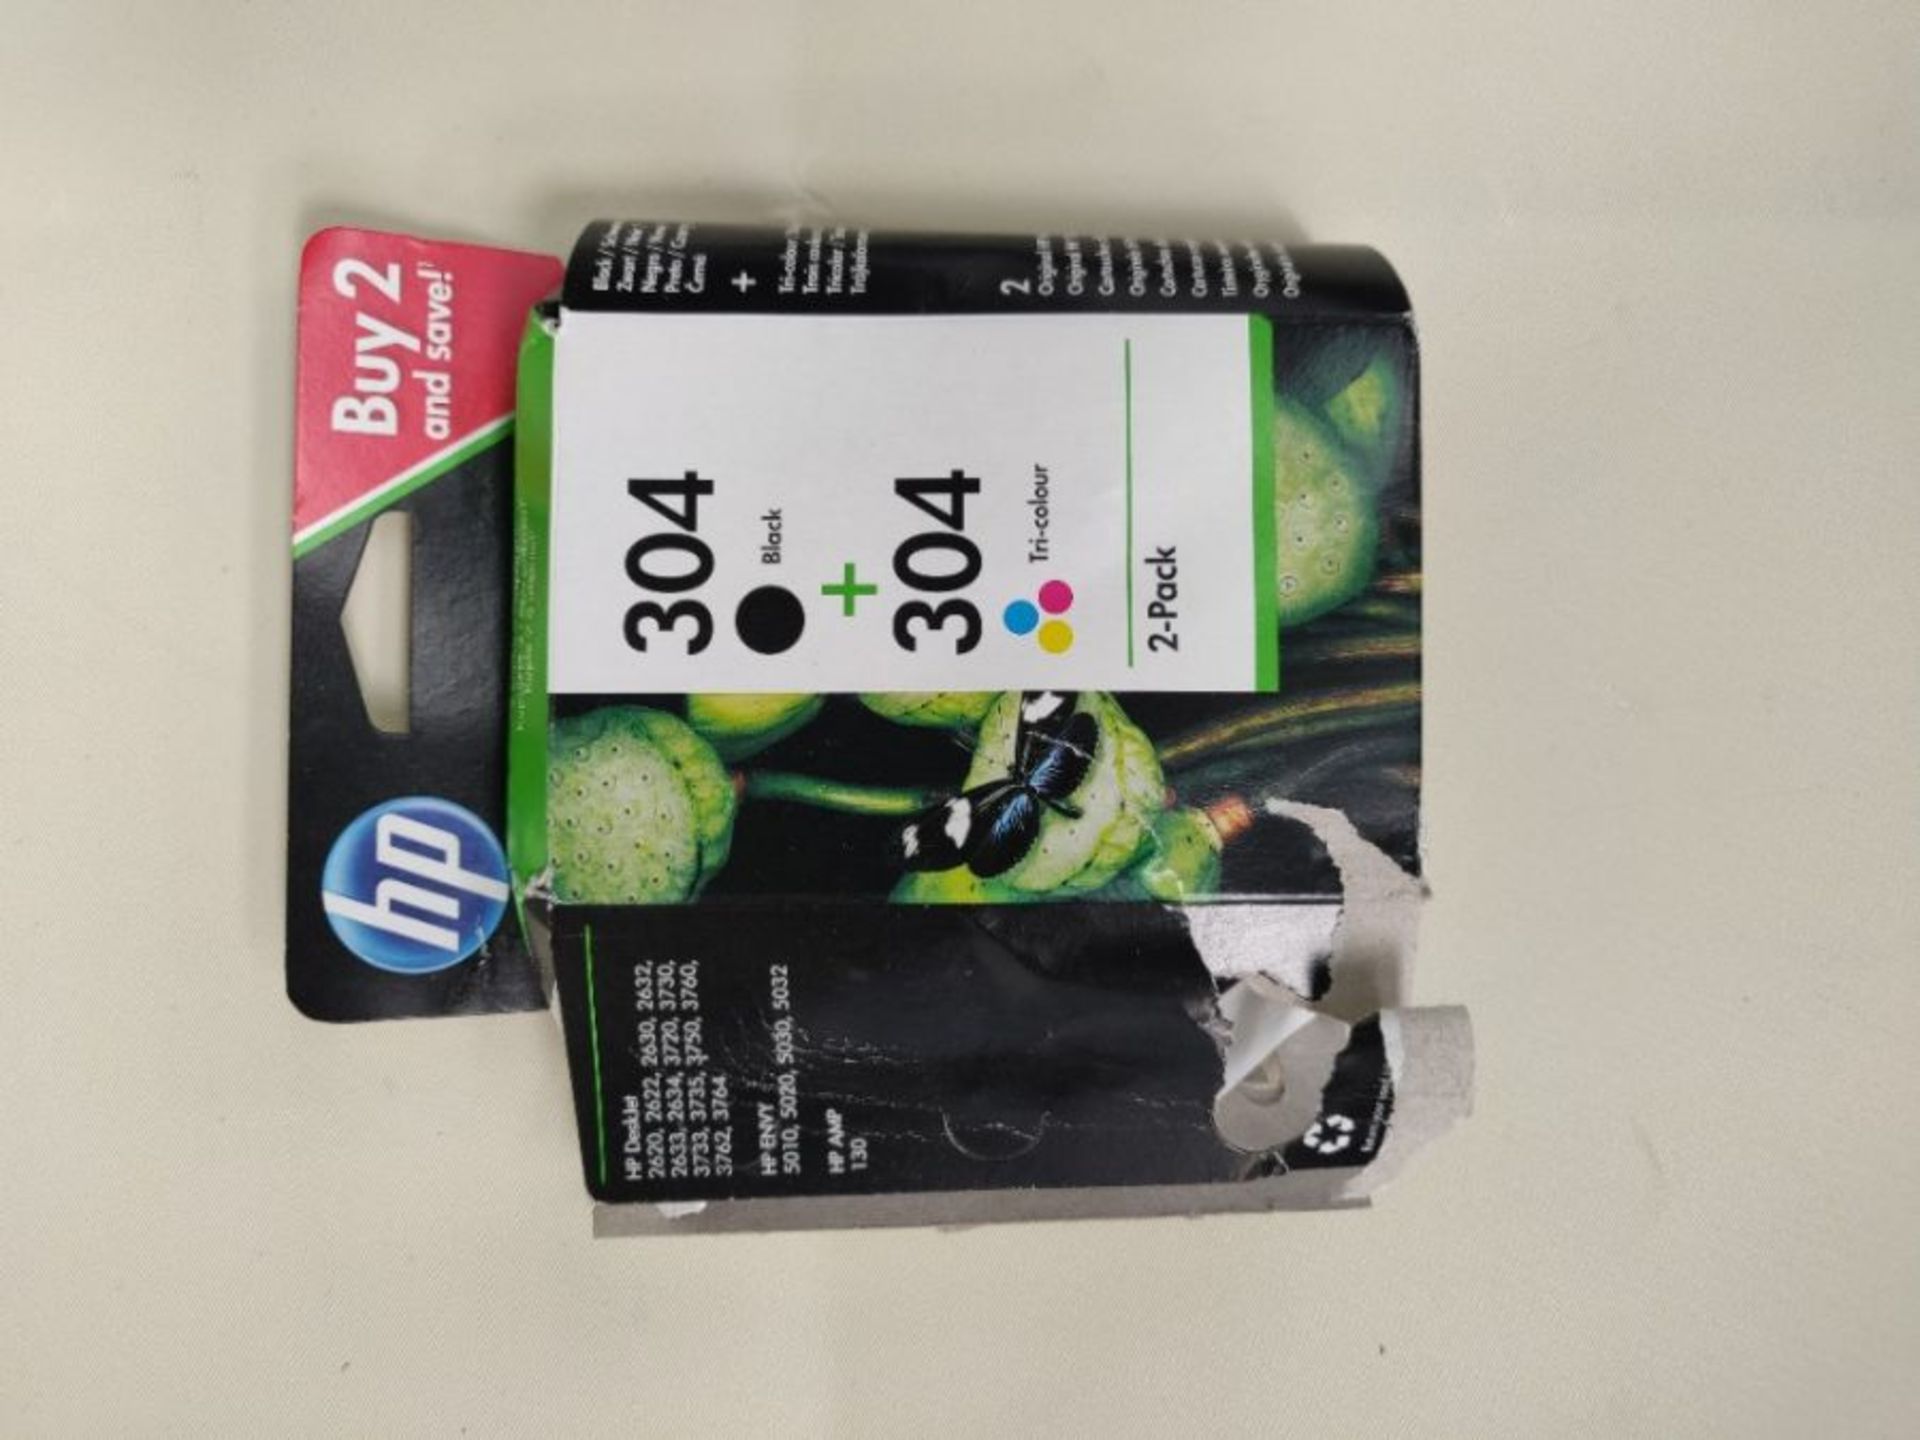 HP 3JB05AE 304 Original Ink Cartridges, Black and Tri-Colour, Multipack - Image 2 of 3